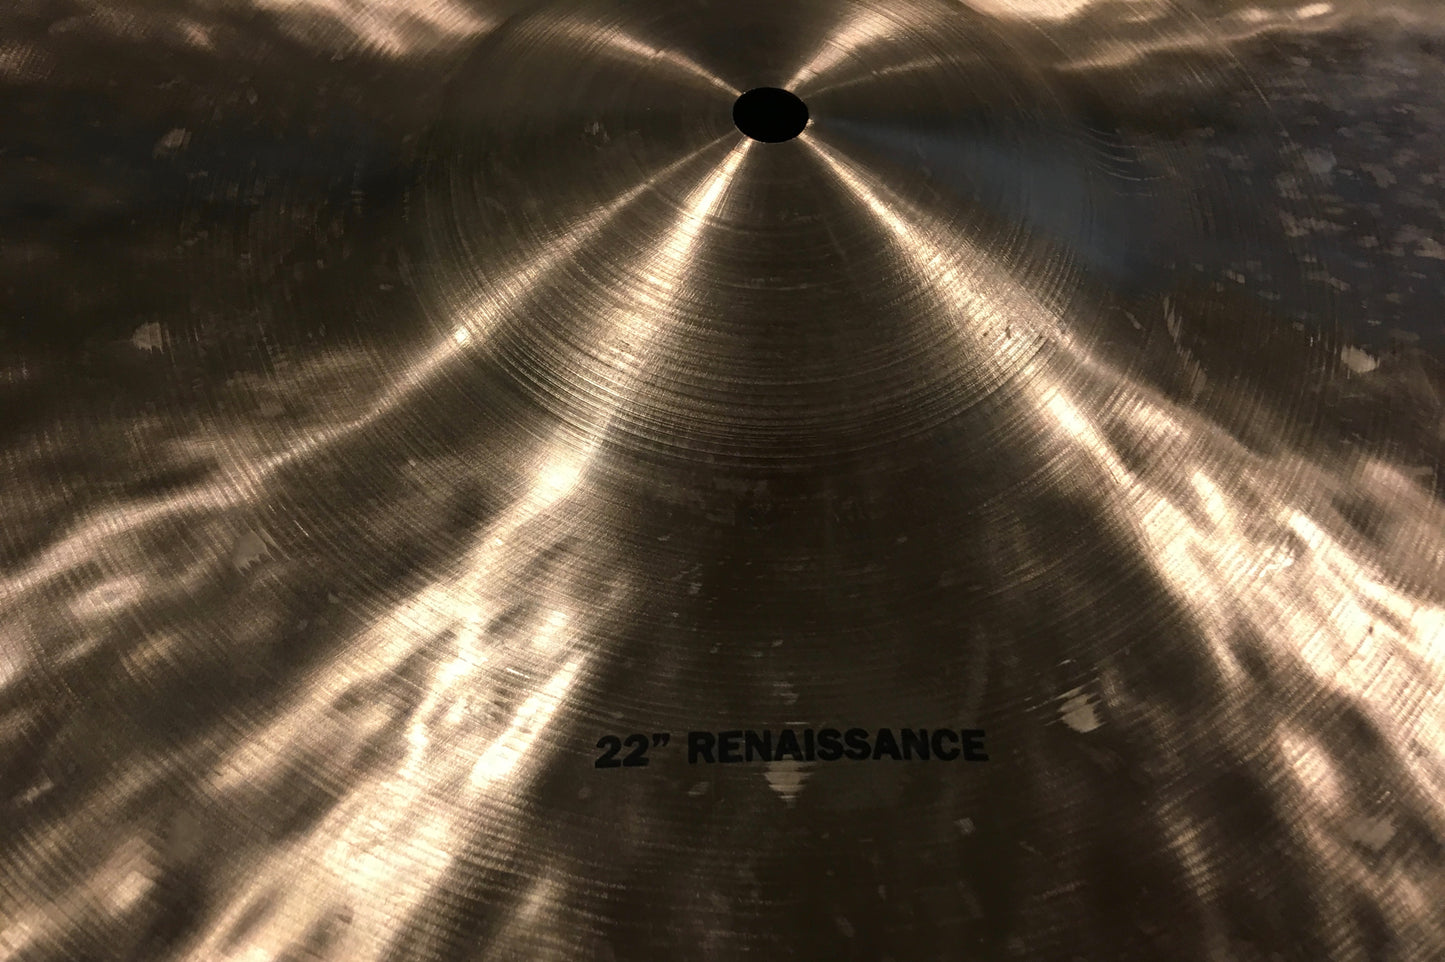 22" K Zildjian Constantinople Renaissance Ride Cymbal 2494g